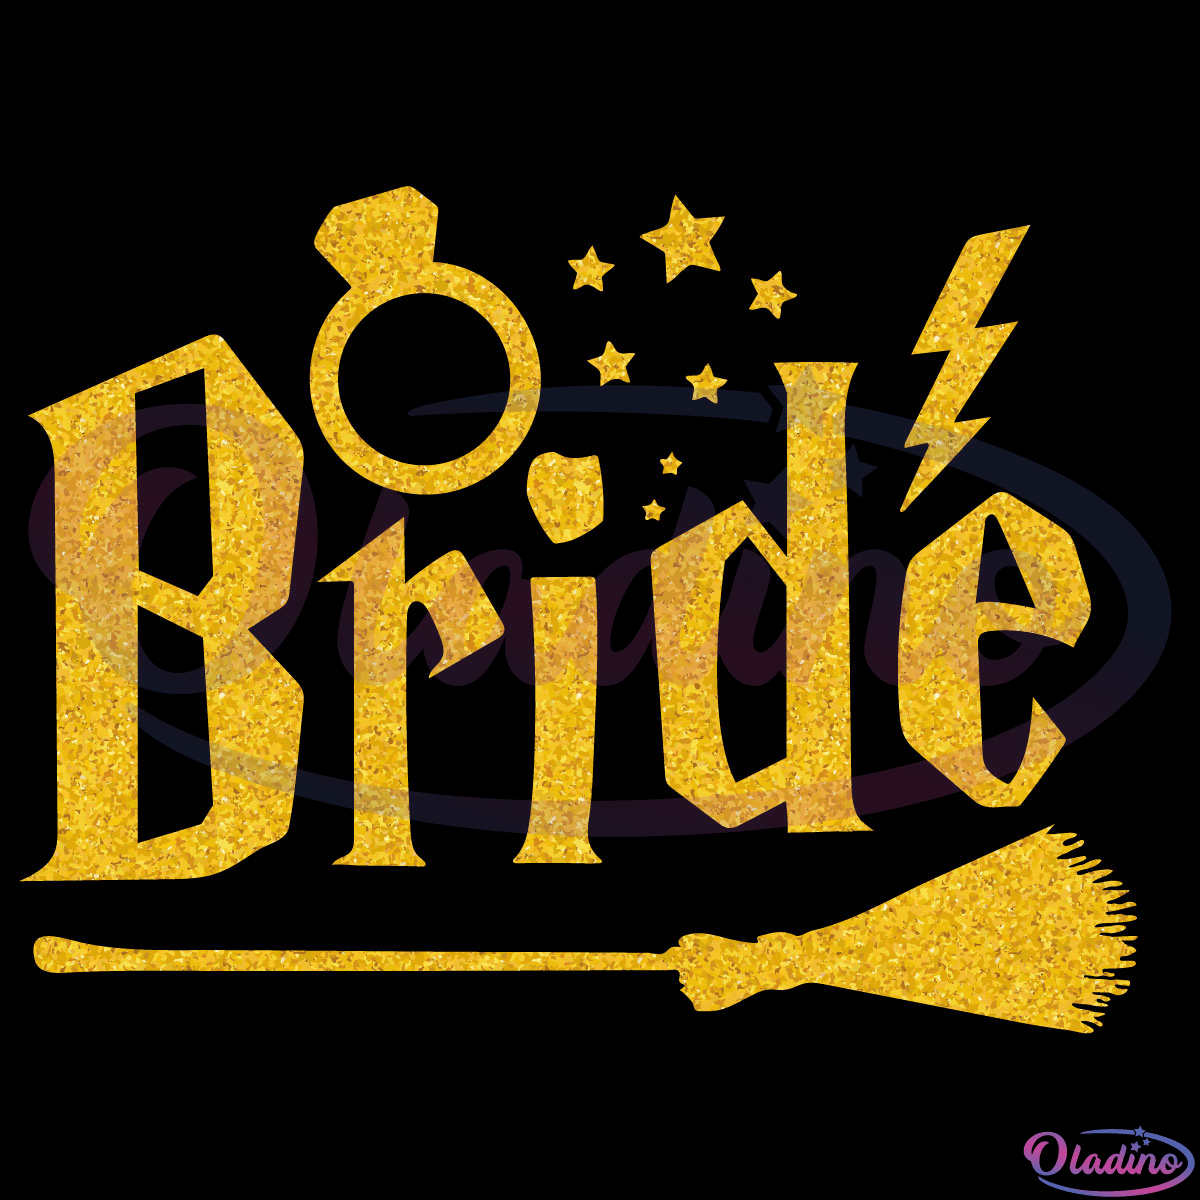 Bride Harry Potter Font Pinkerble Svg TB190122003